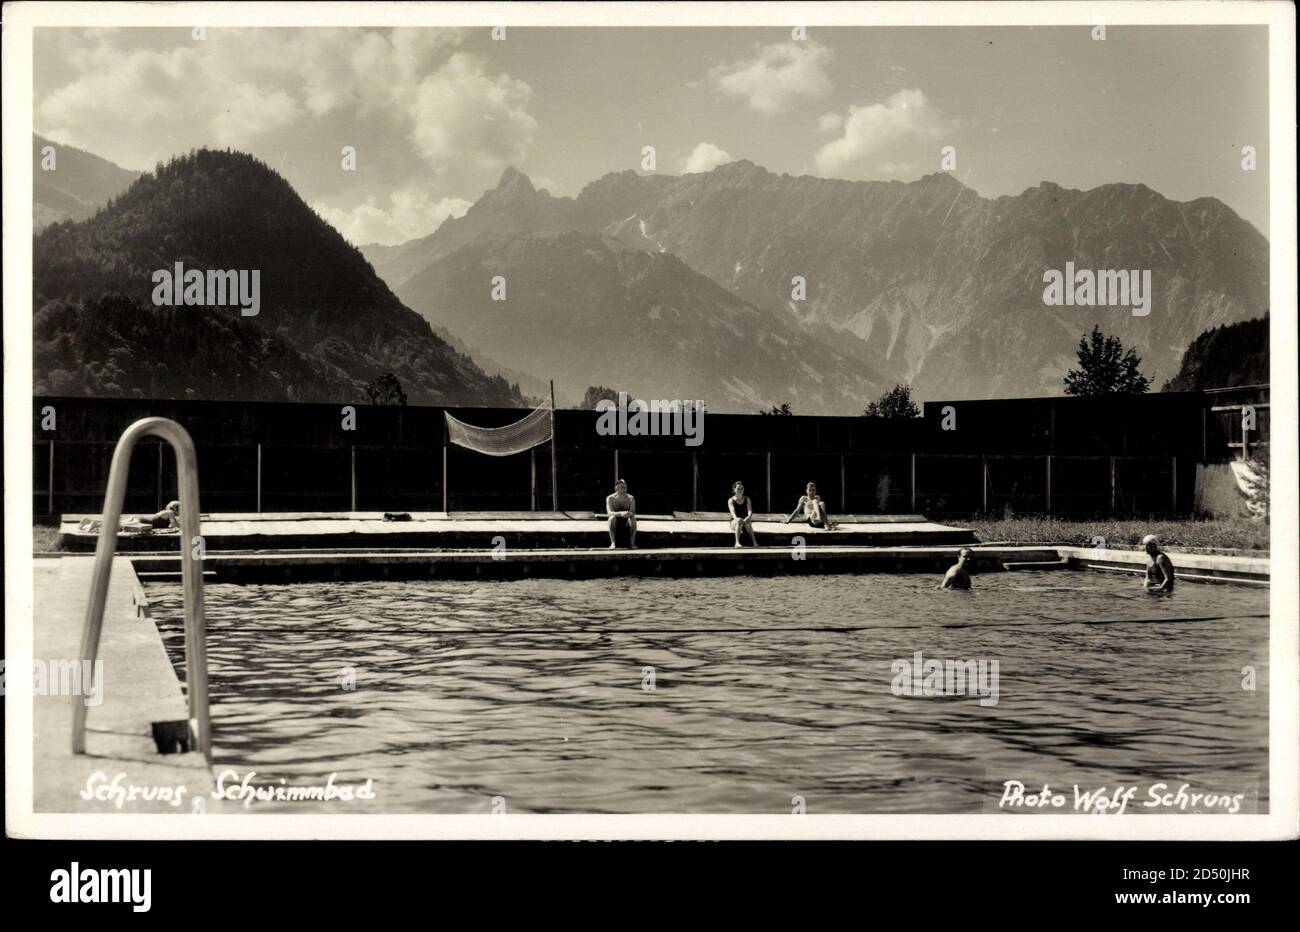 Schruns Vorarlberg, Schwimmbad mit Gebirge | utilisation dans le monde entier Banque D'Images